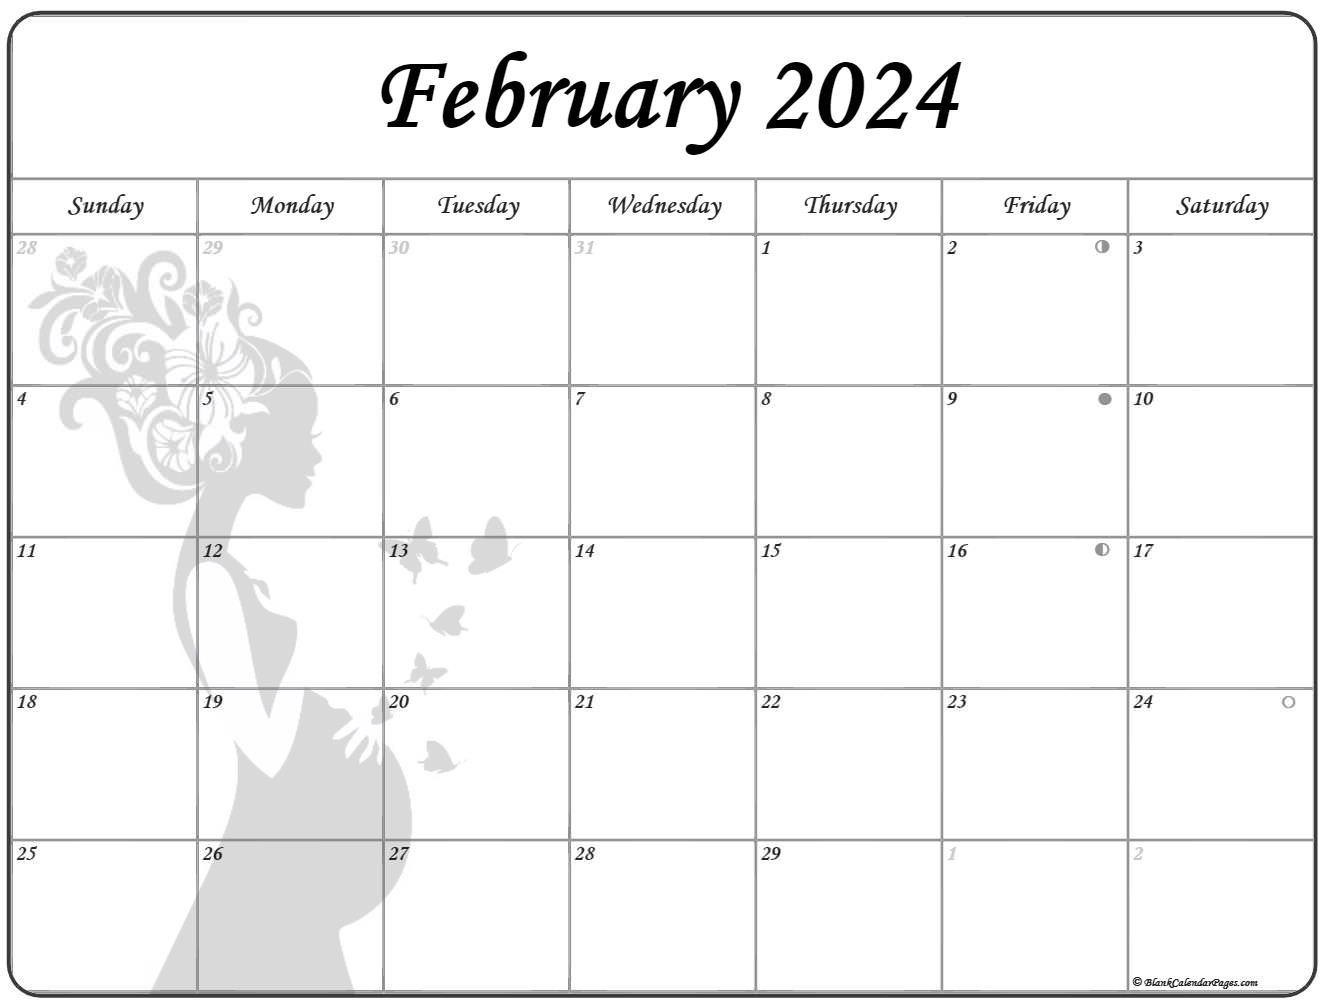 February 2020 Pregnancy Calendar